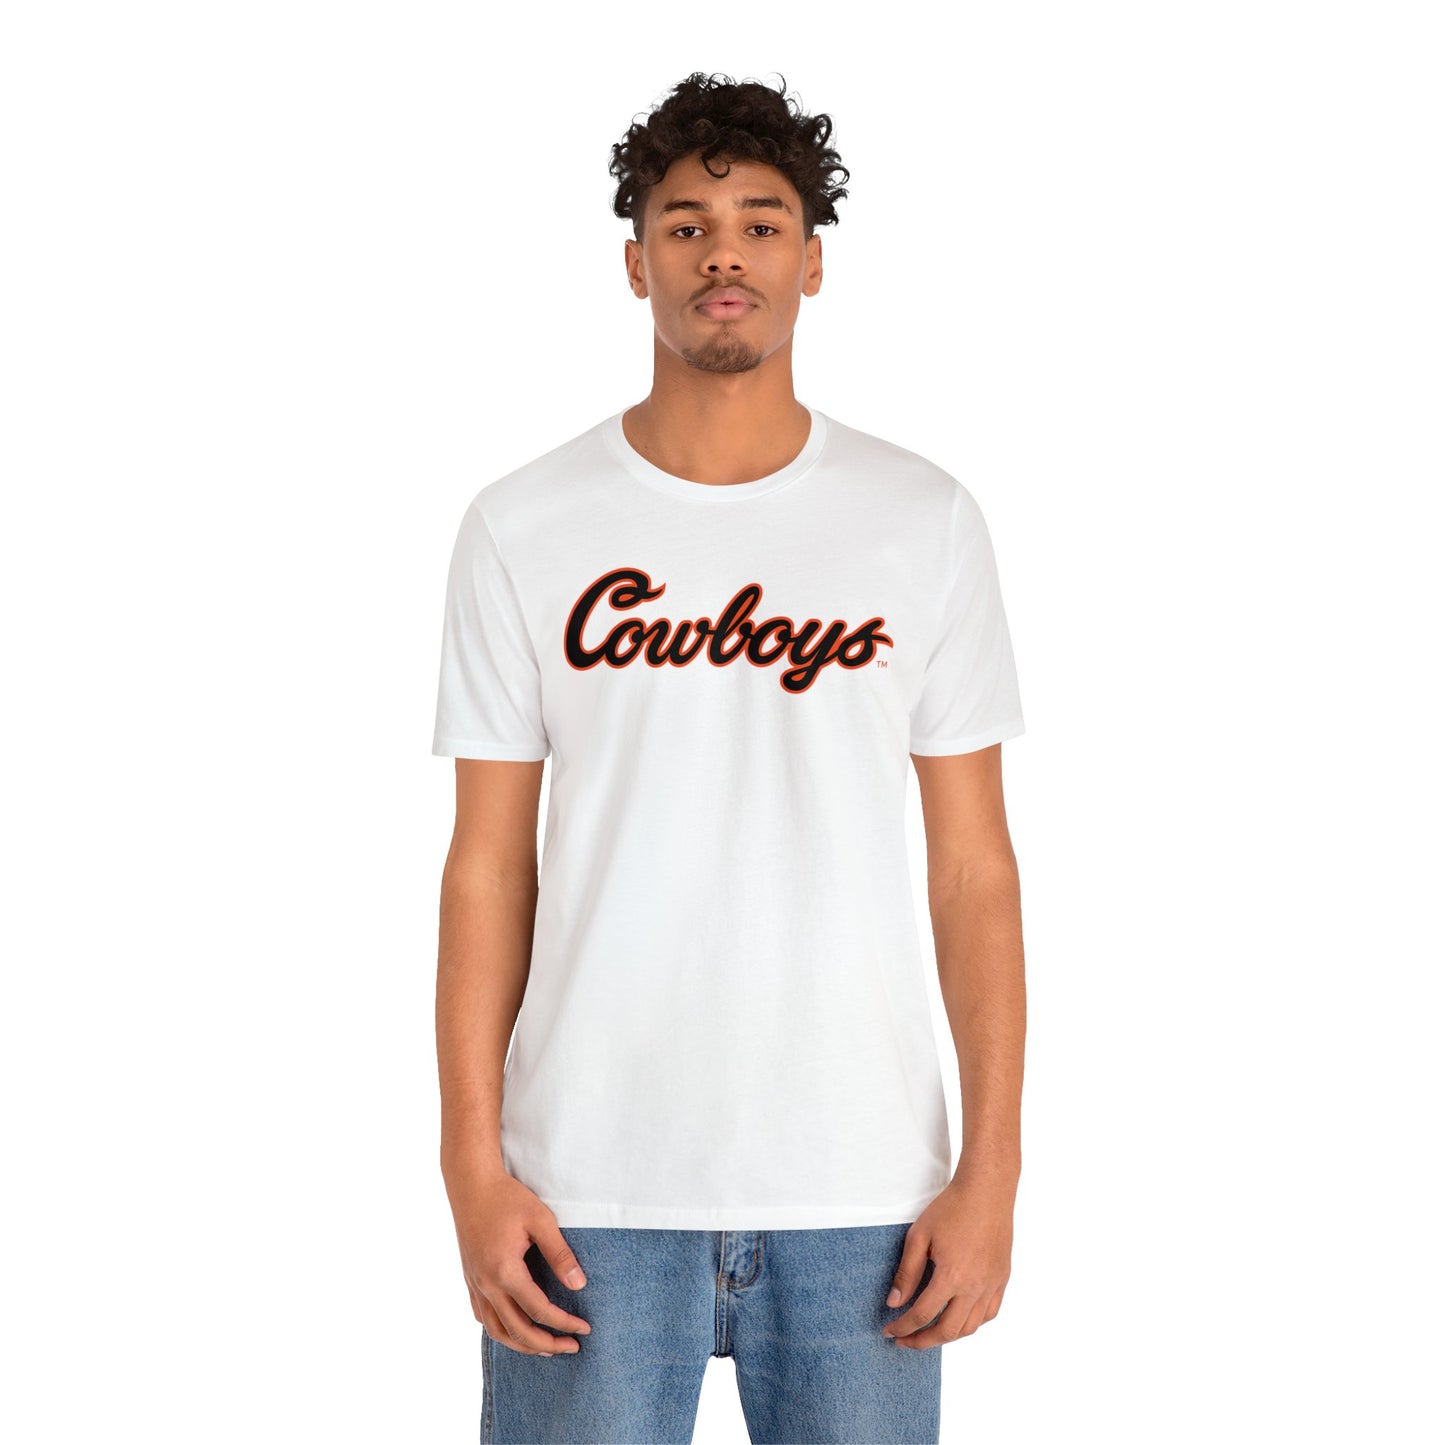 Quion Williams #5 Cursive Cowboys T-Shirt